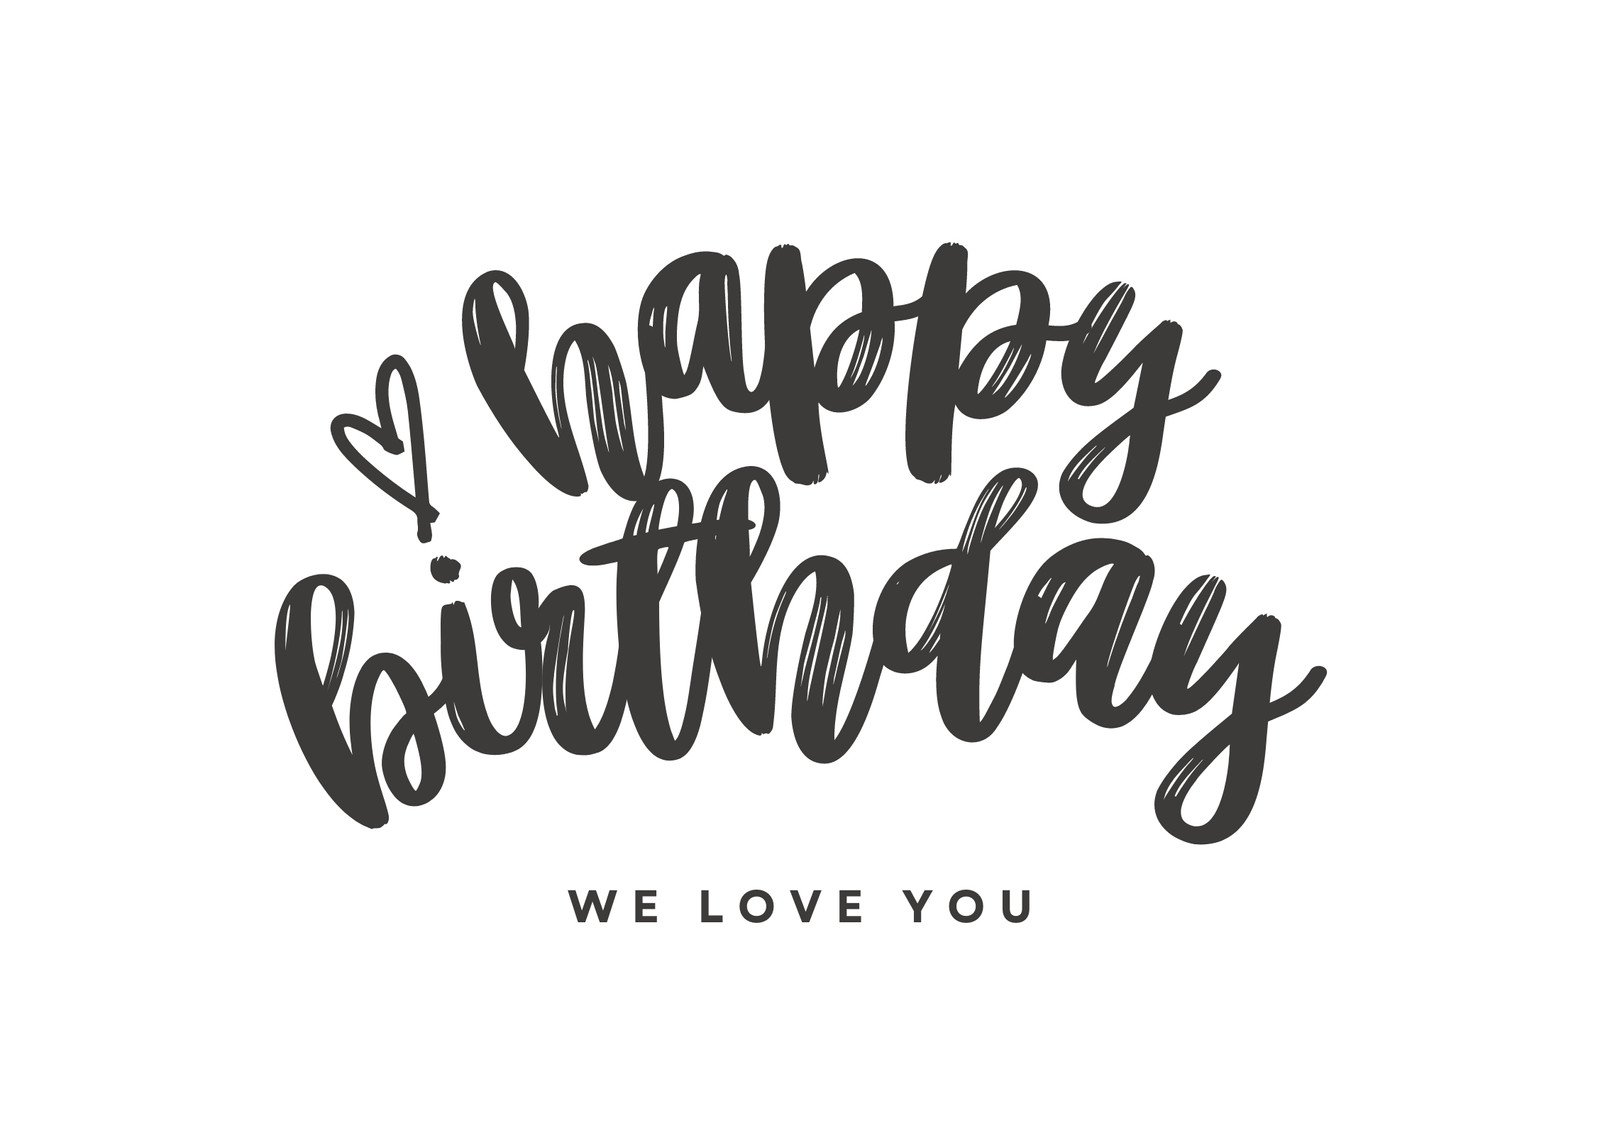 Digital Birthday Card Downloadable Happy Birthday Card Printable